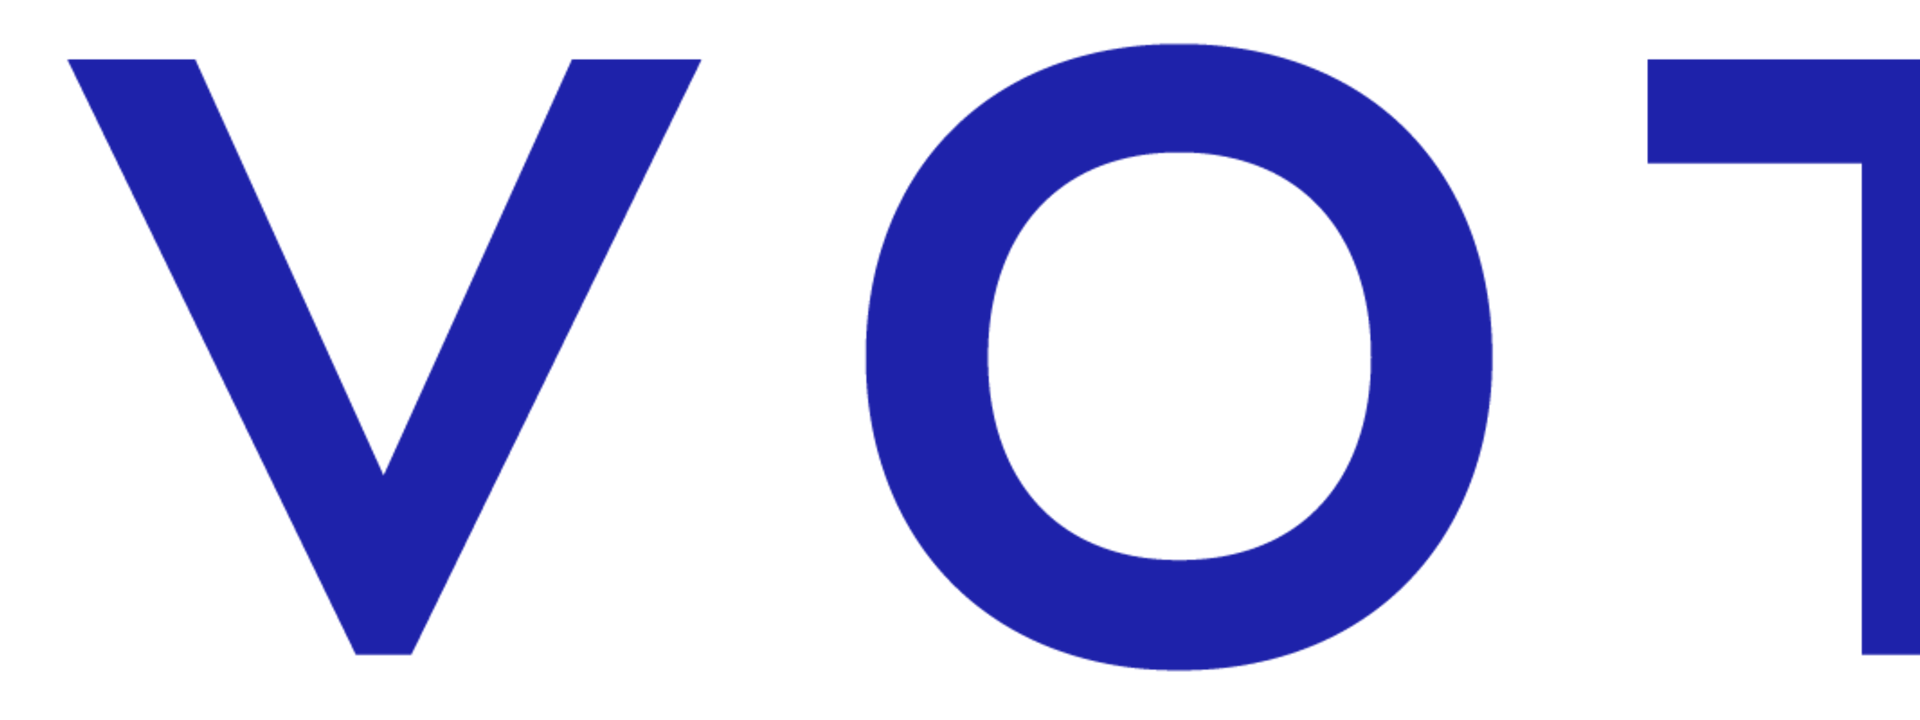 225 Novotel Logo Images, Stock Photos & Vectors | Shutterstock